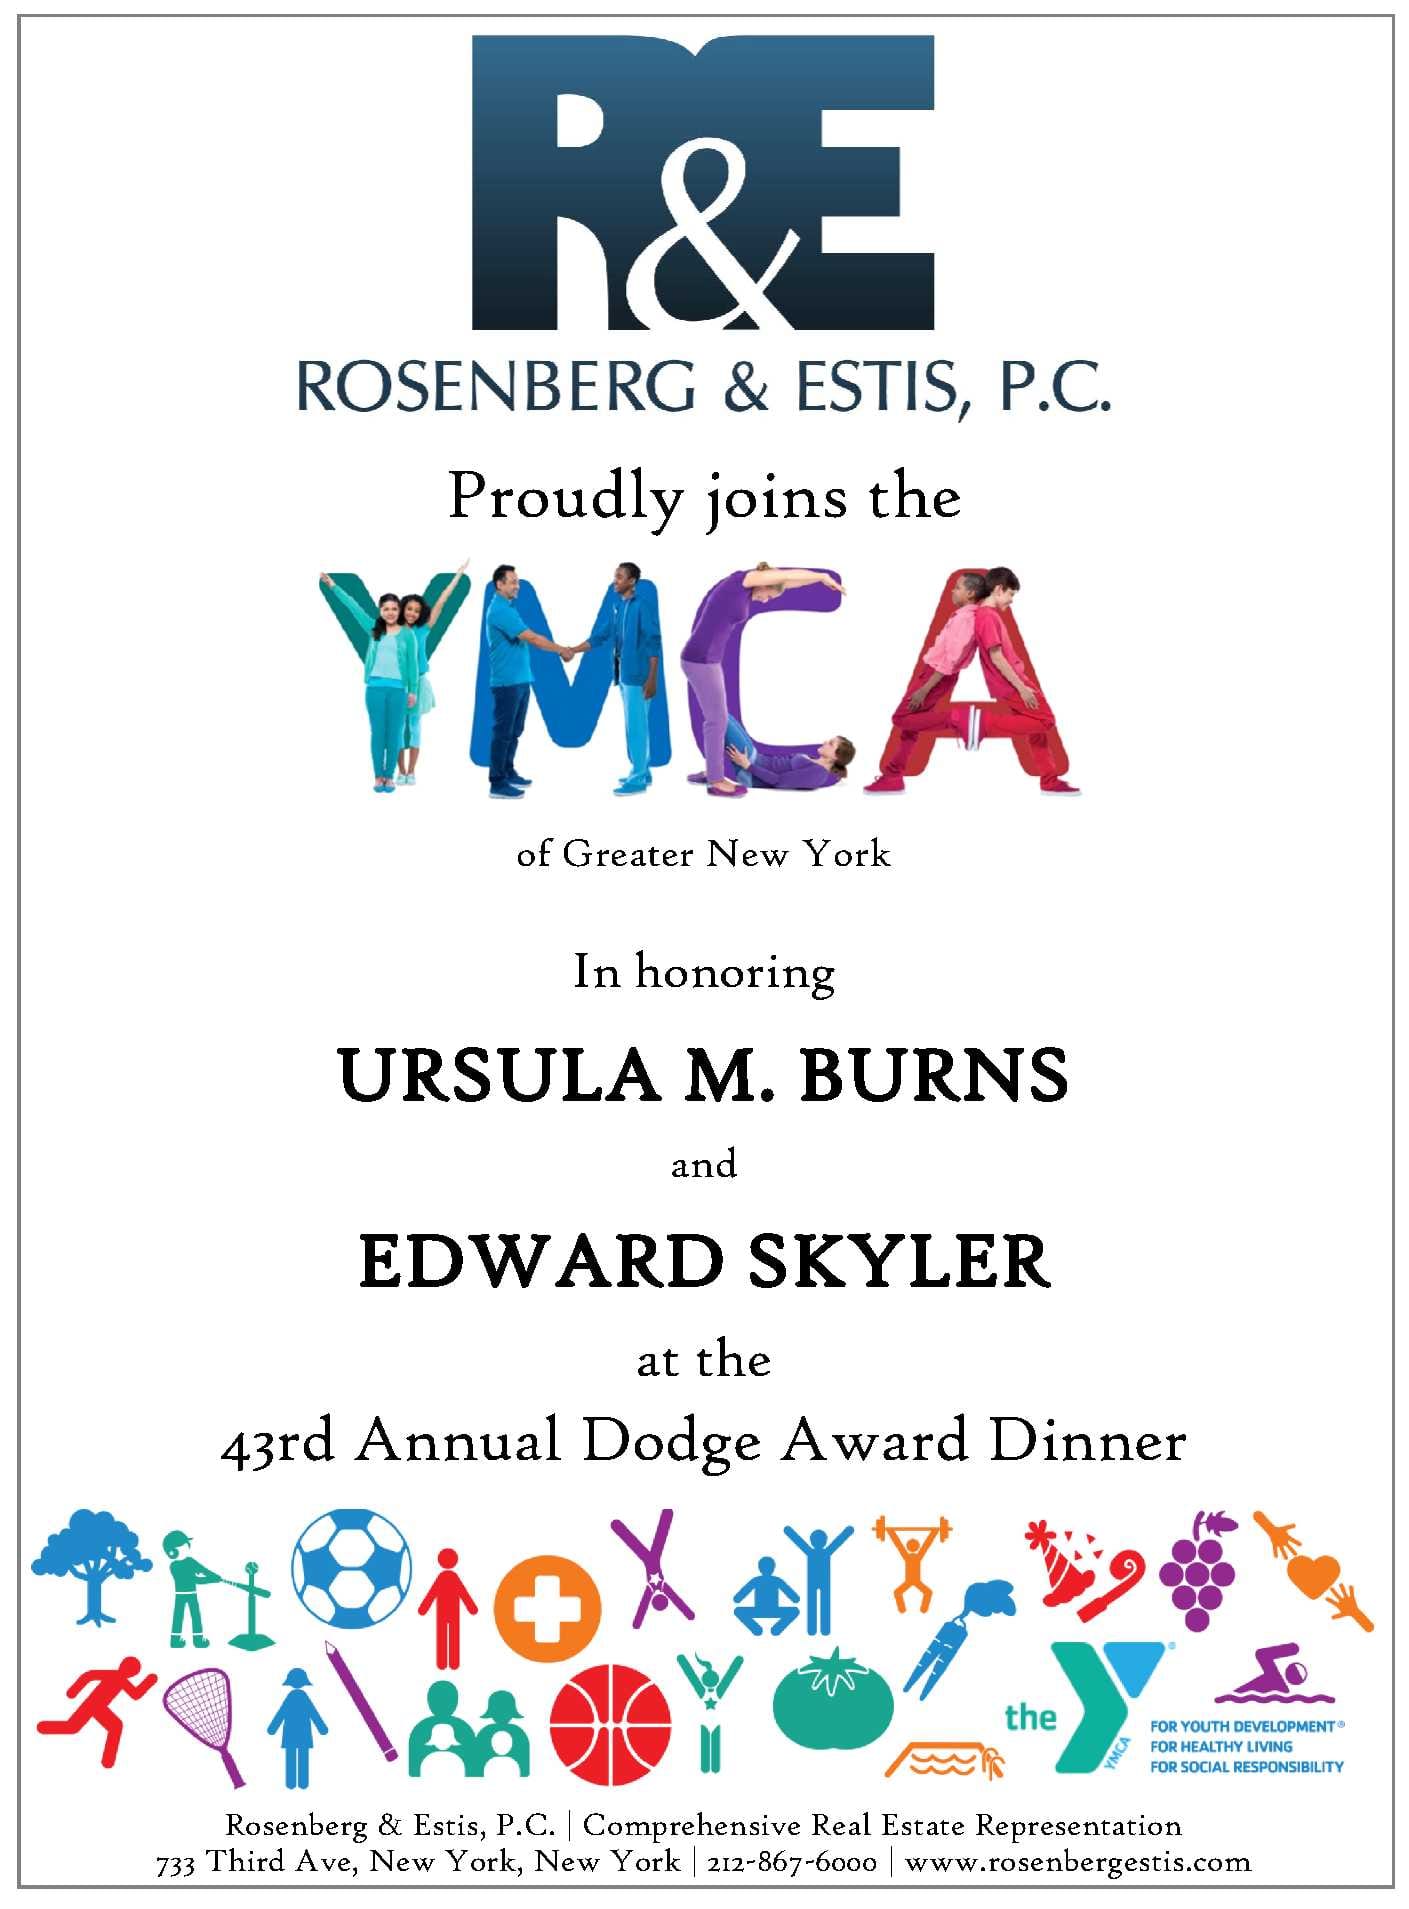 Rosenberg & Estis, P.C. proudly joins the YMCA of greater New York In honoring Ursula M. Burns and Edward Skyler at 43rd Annual Dodge Award Dinner